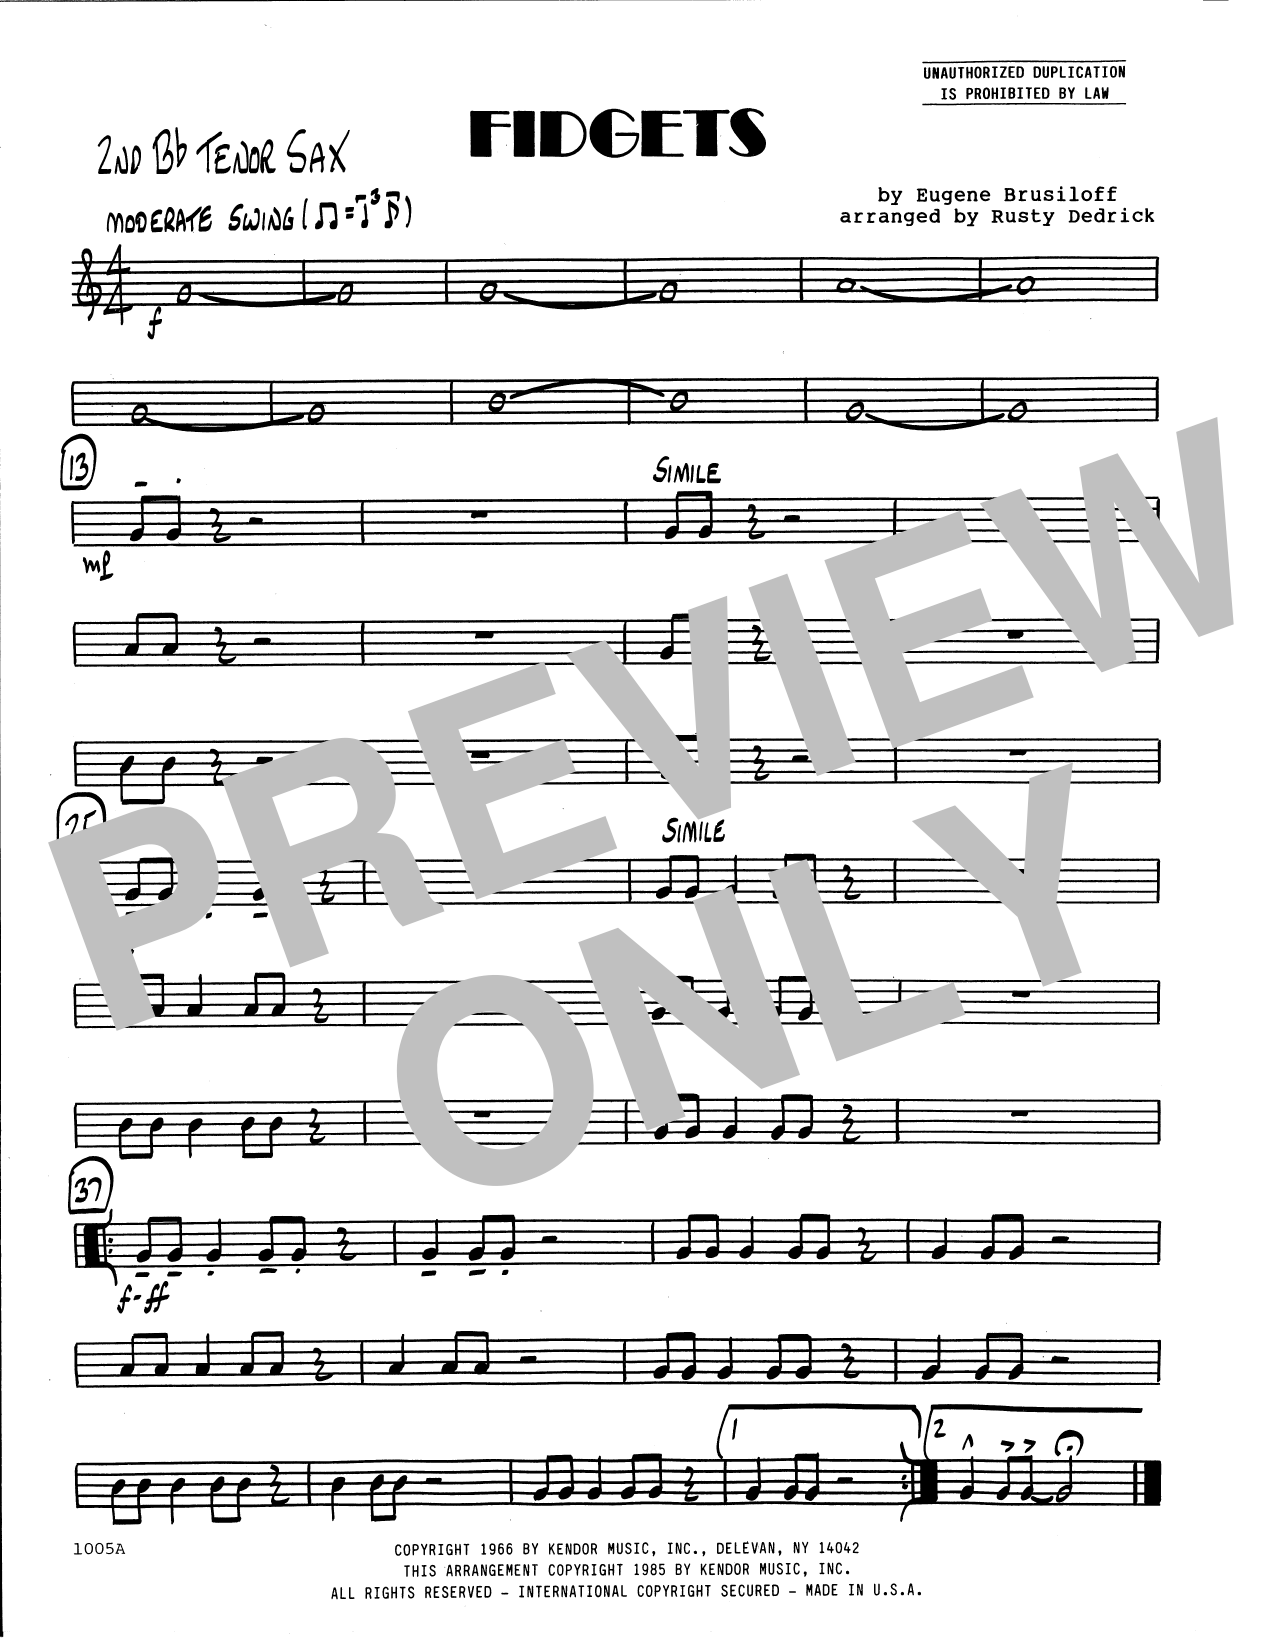 Download Eugene Brusiloff Fidgets (arr. Rusty Dedrick) - 2nd Bb T Sheet Music